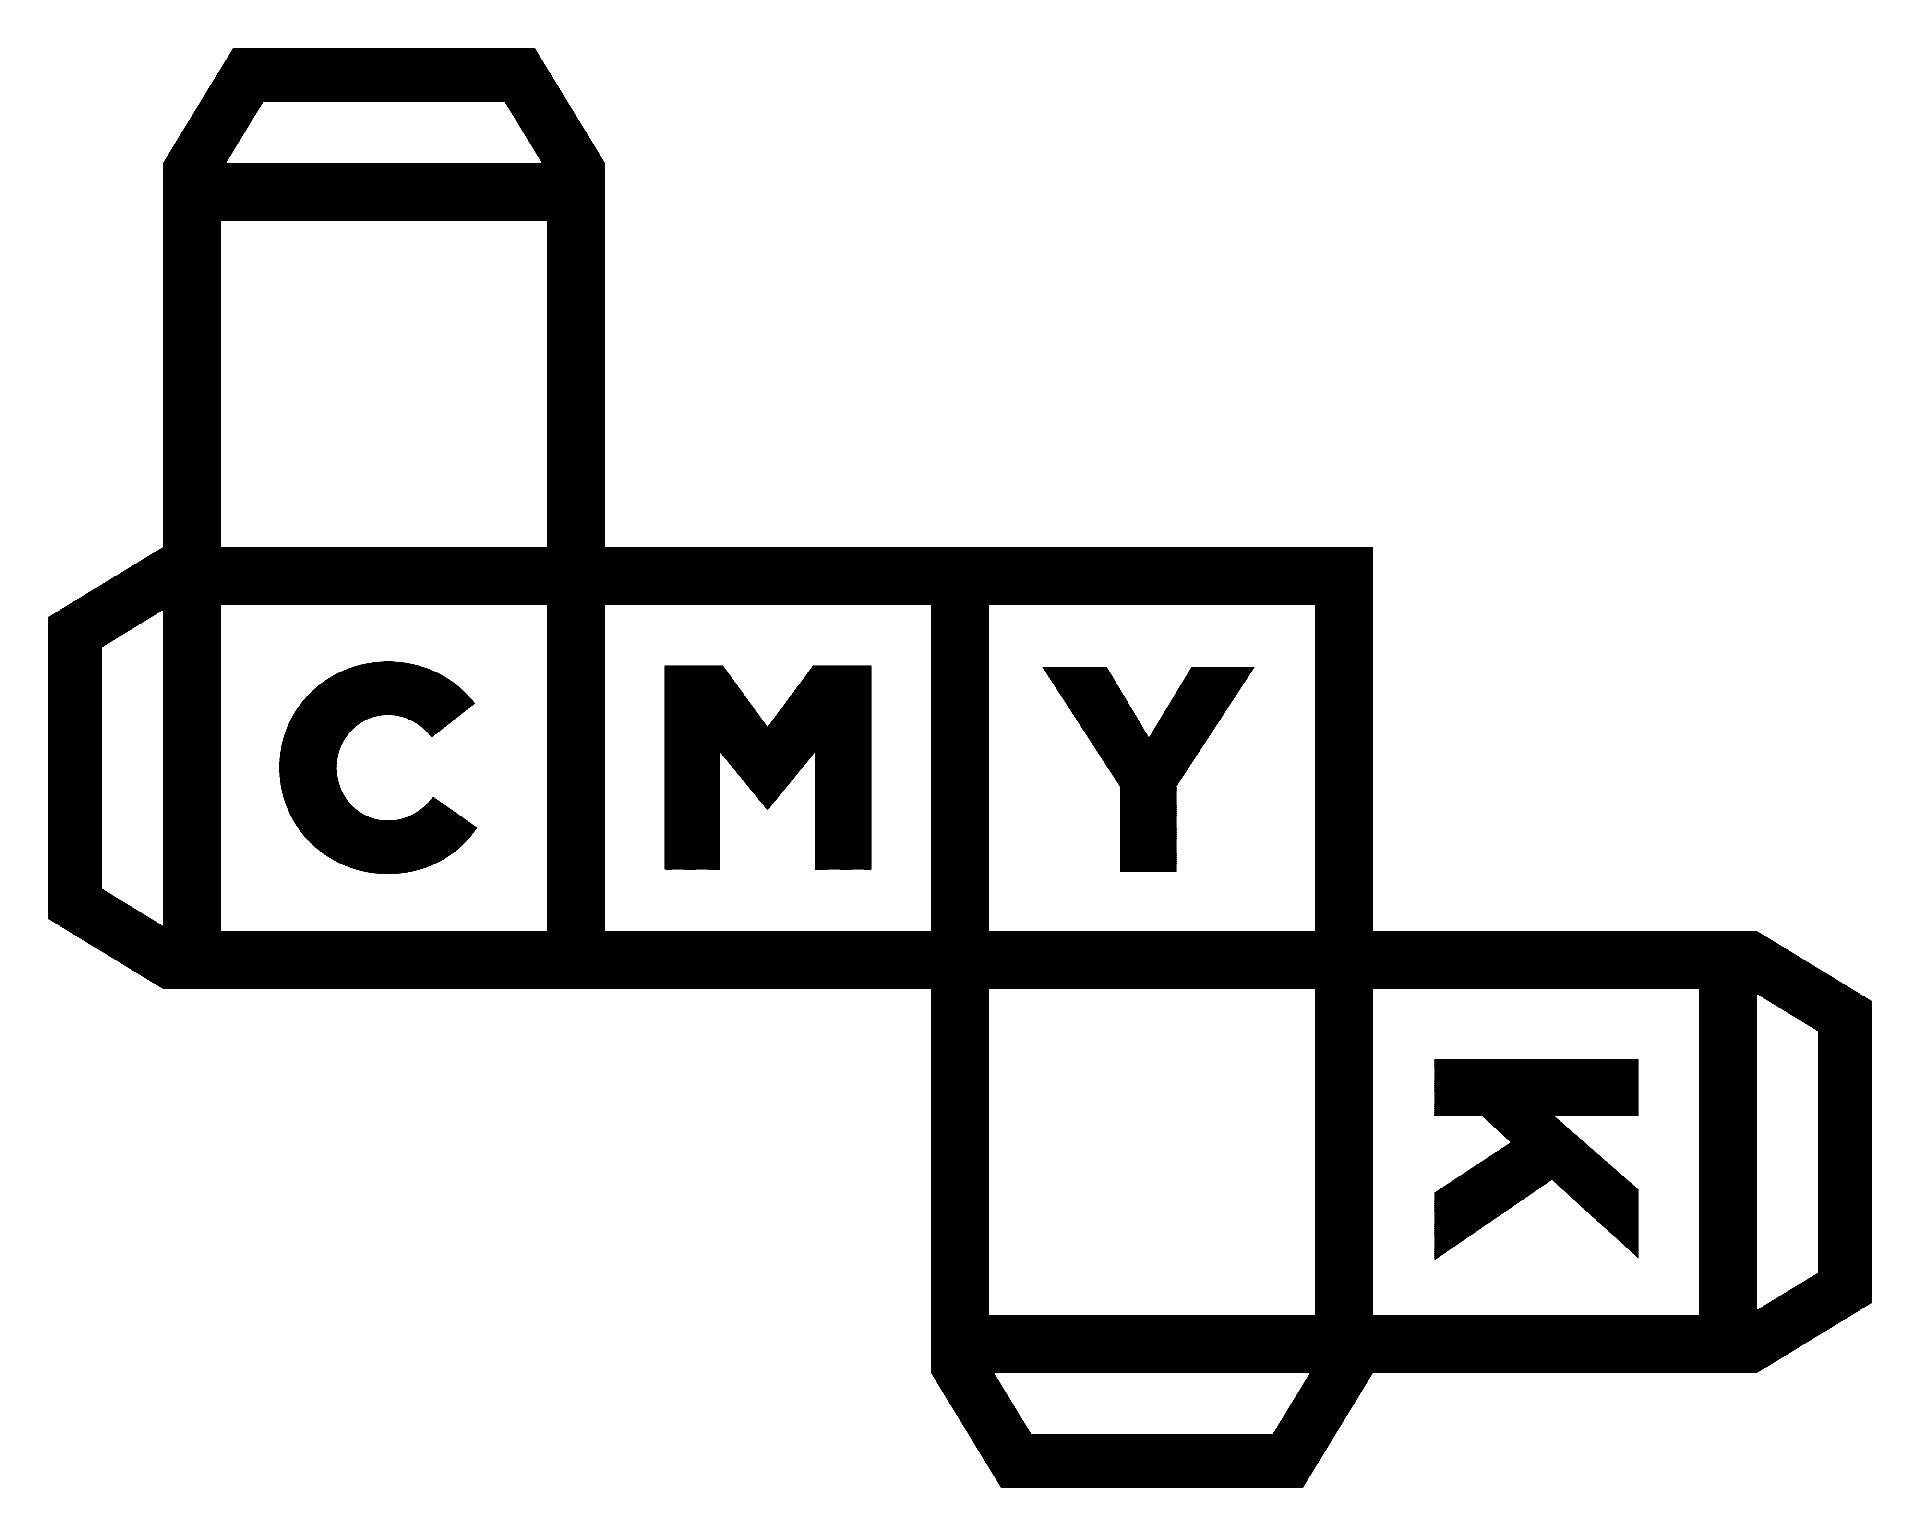 Brand: CMYK